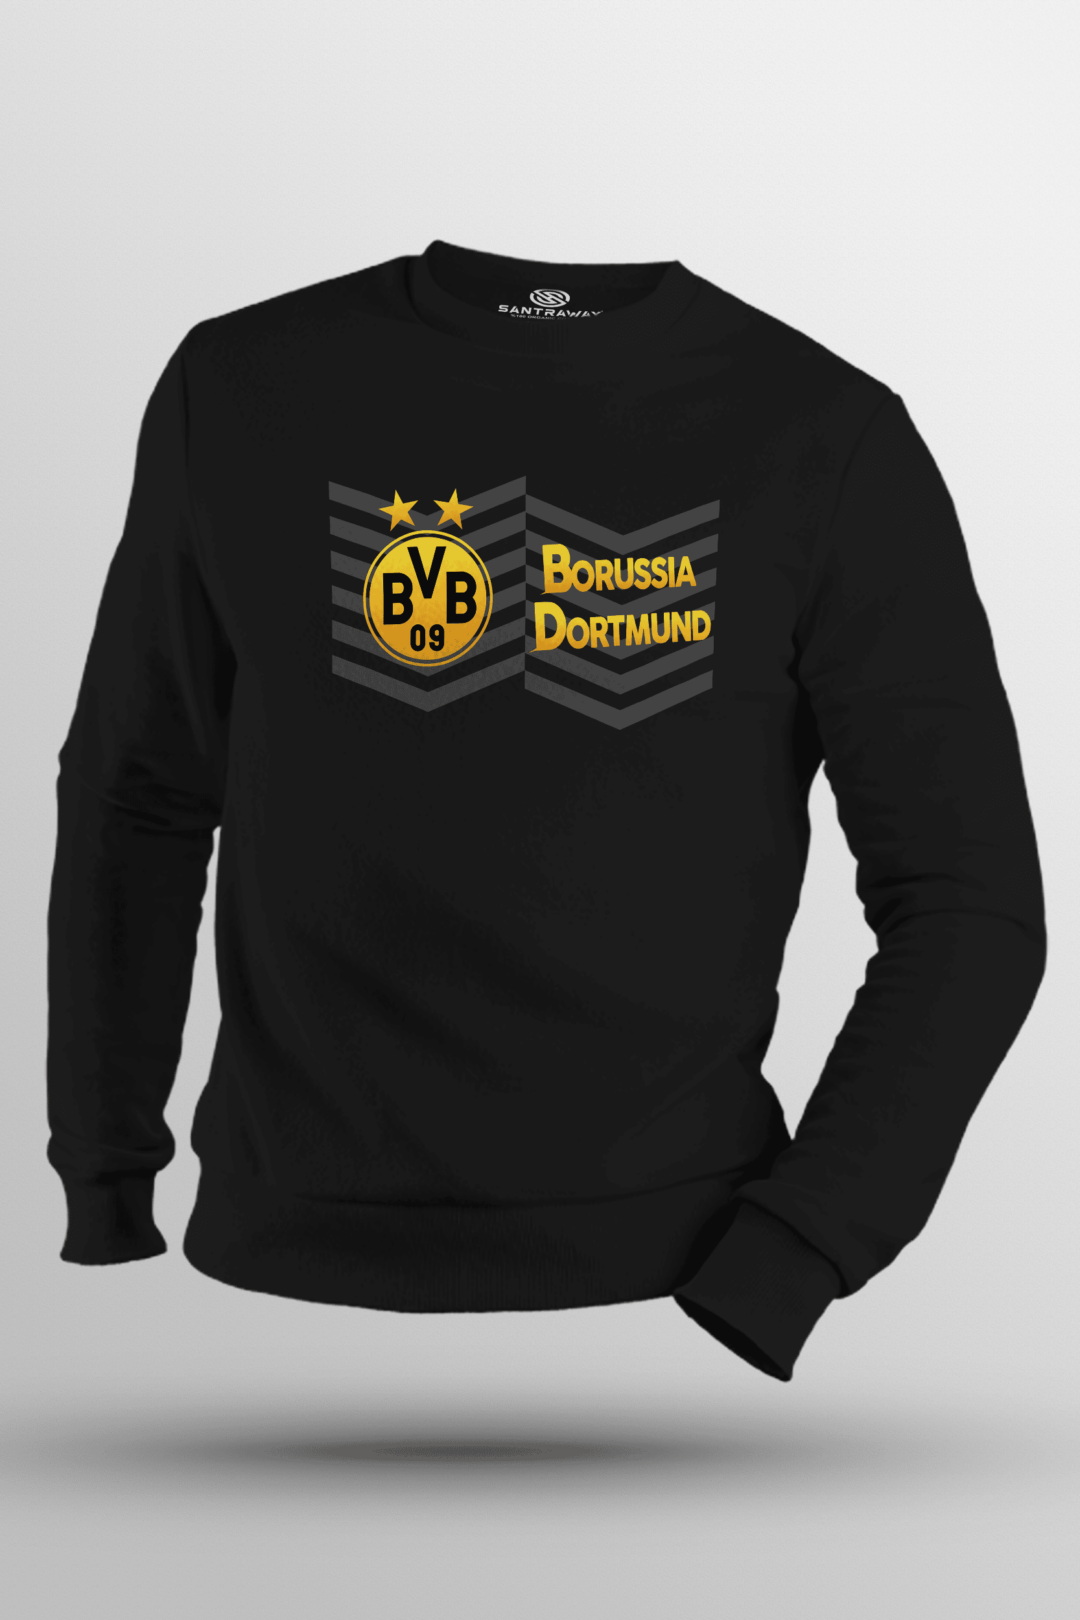 Borussia Dortmund Bvb09 Font SweatS